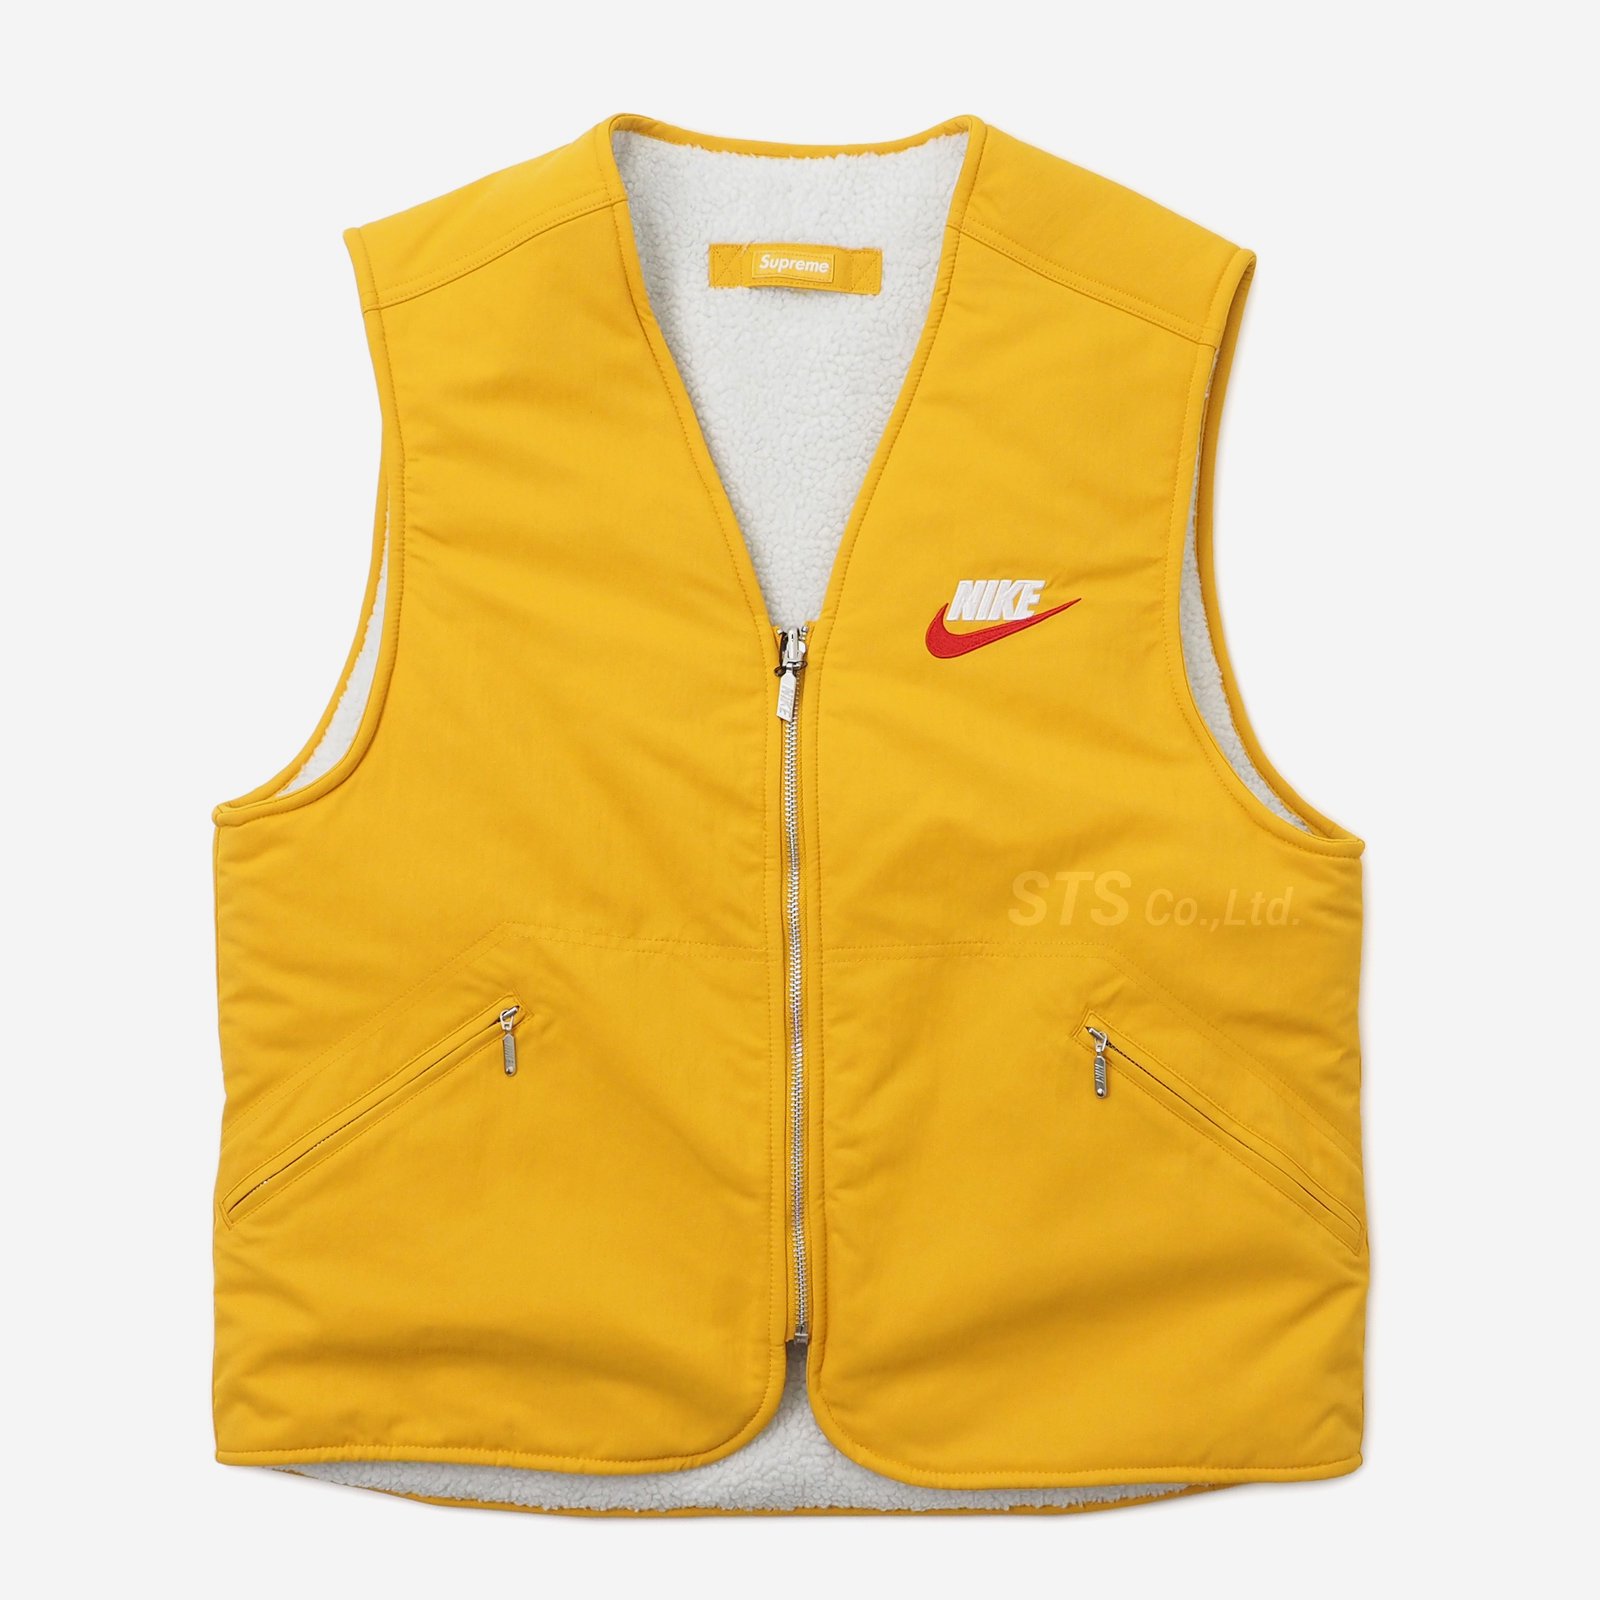 Supreme/Nike Reversible Nylon Sherpa Vest - ParkSIDER